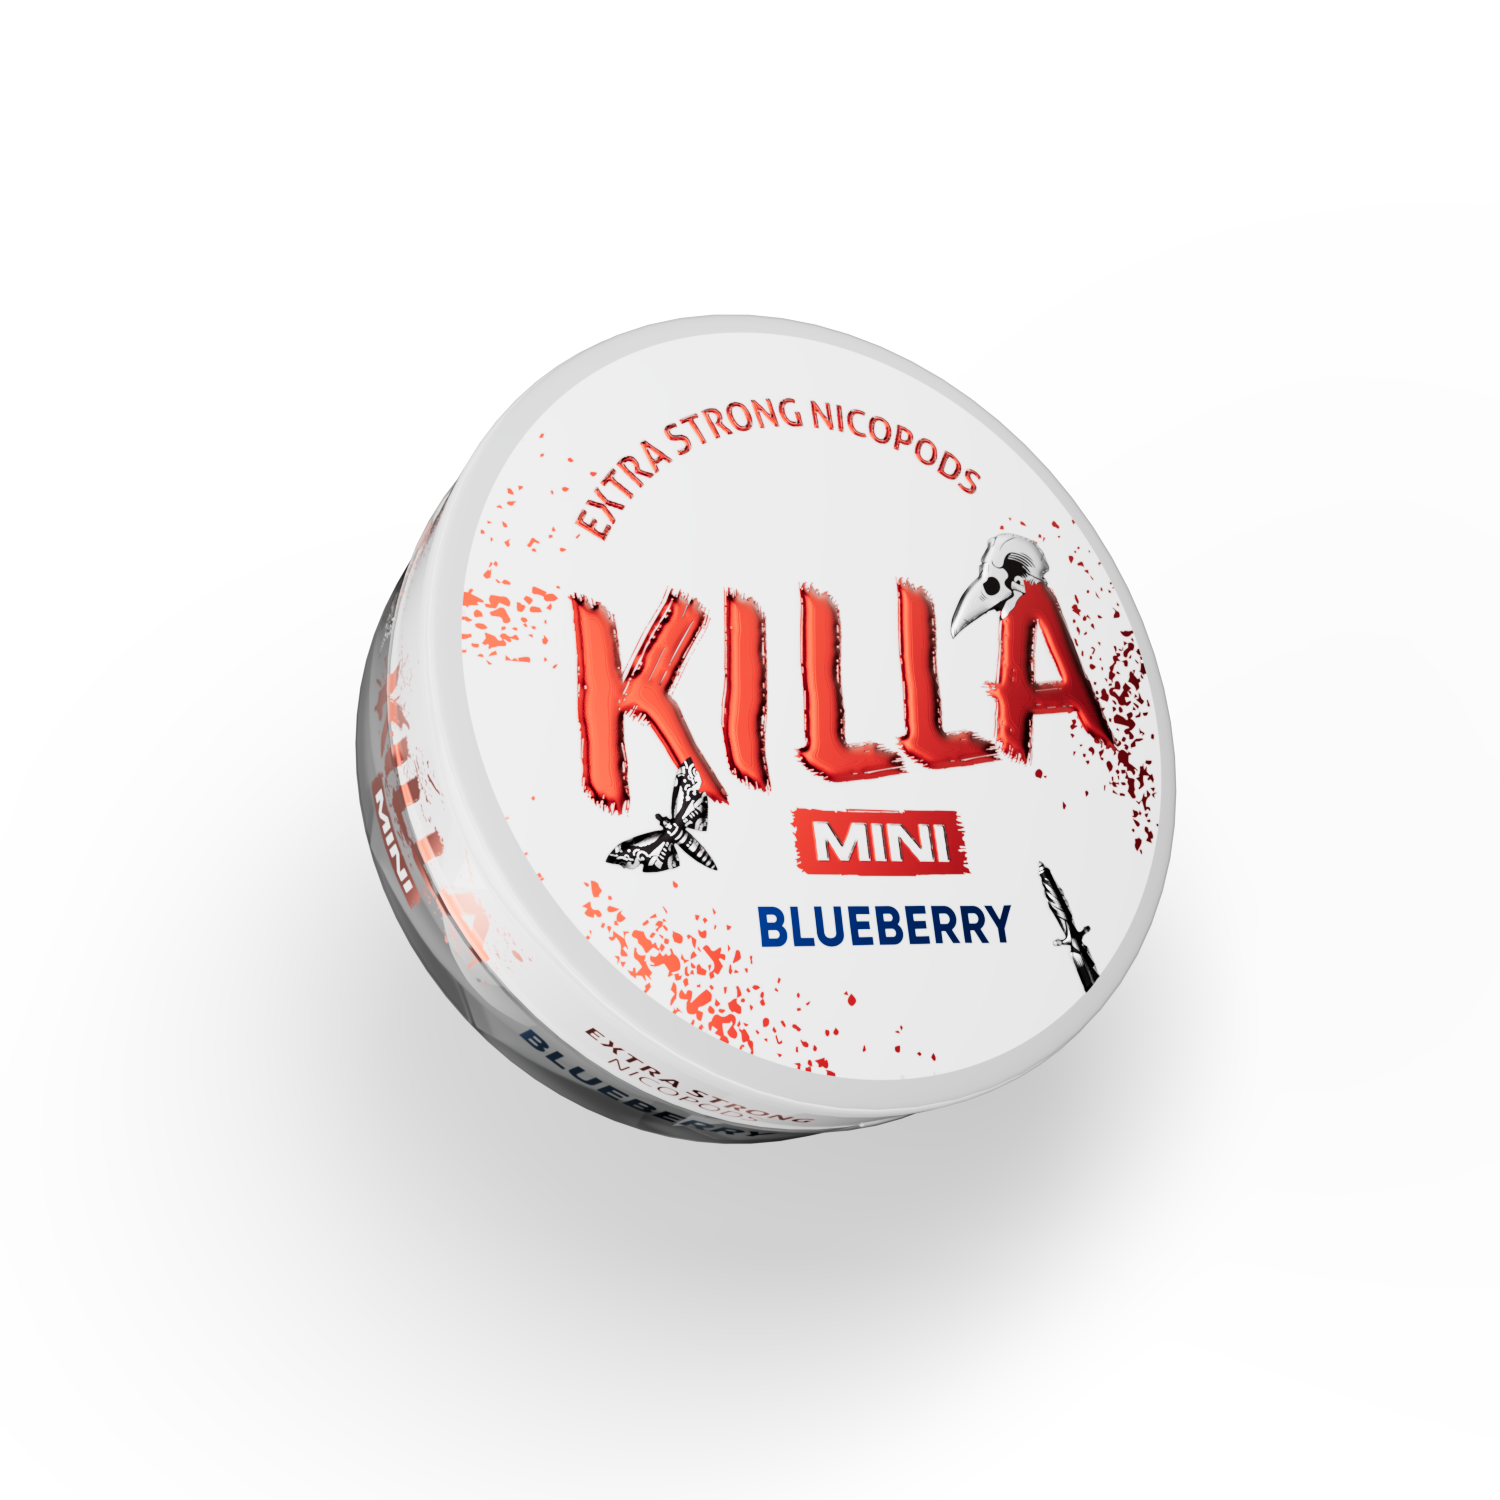 Killa_Mini_Blueberry_2_uus